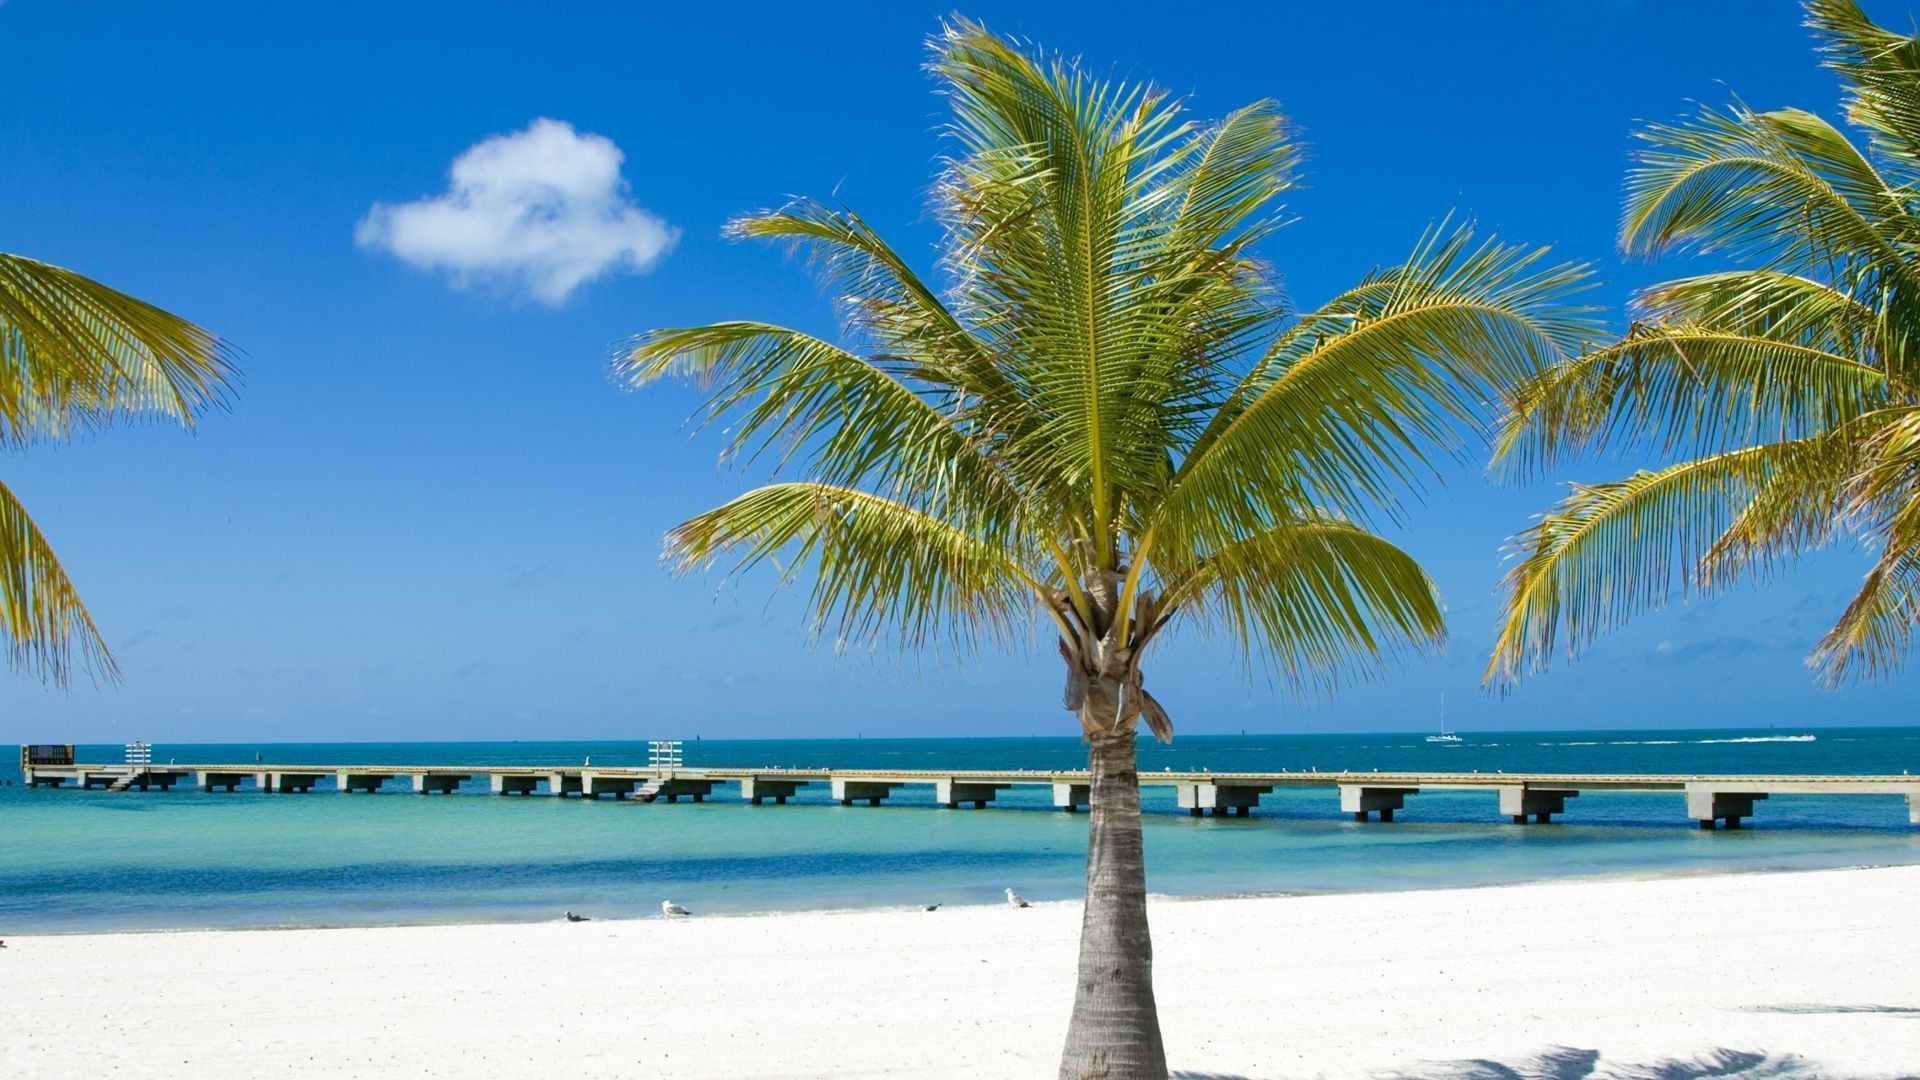 florida wallpaper hd,tree,palm tree,arecales,caribbean,vacation